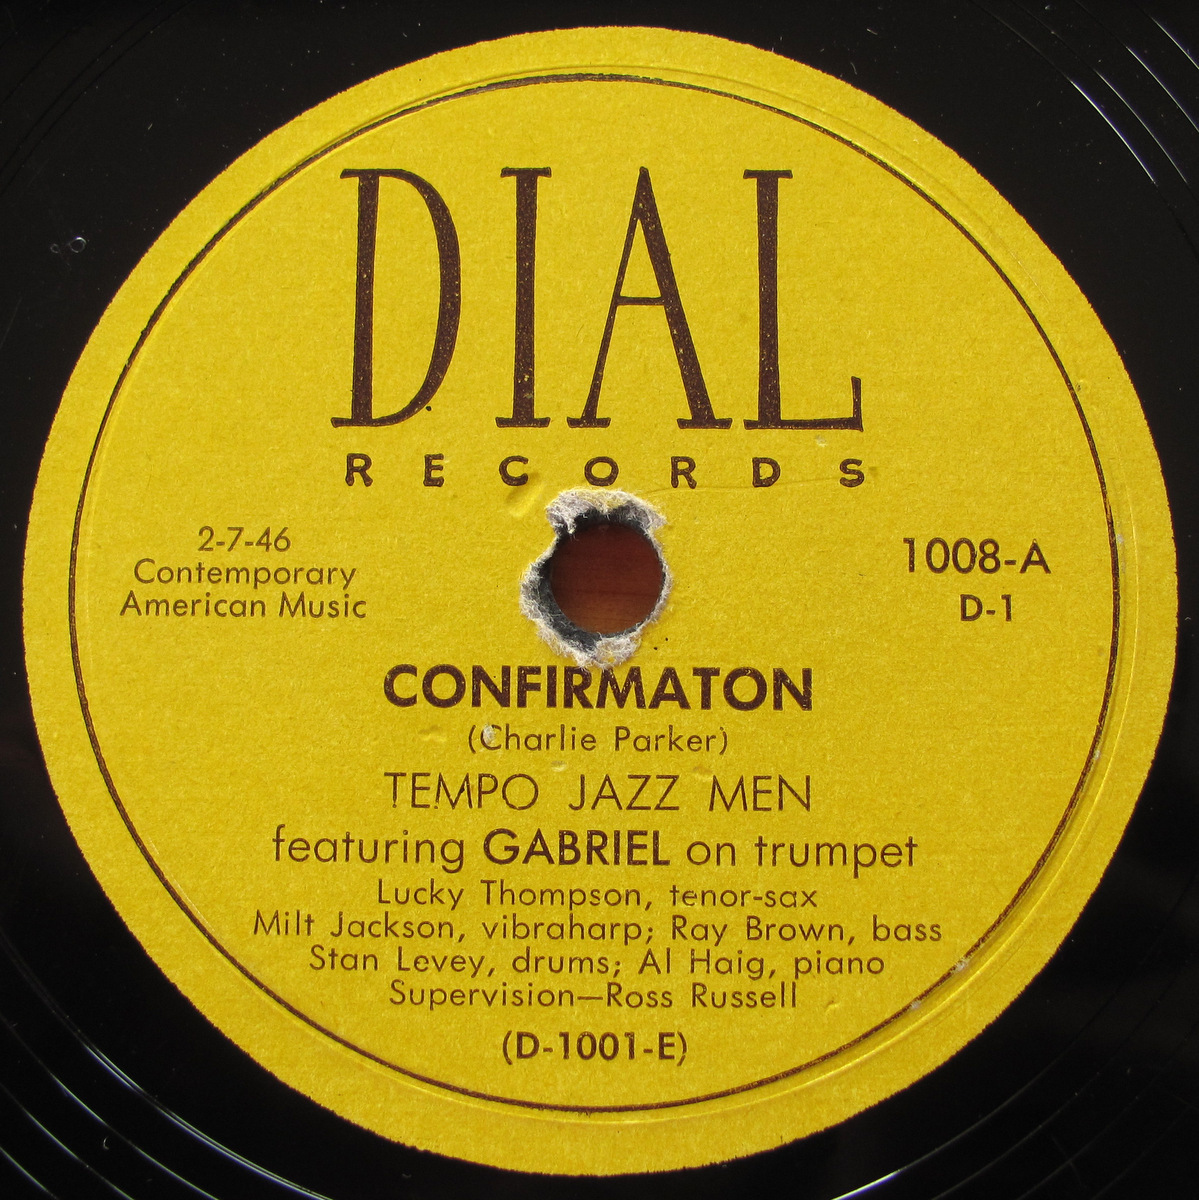 [ запись ]78rpm SP запись Dial 1008 Dizzy Gillespie Milt Jackson Serge Chaloff Al Haig Confirmation / DIAL-ogue